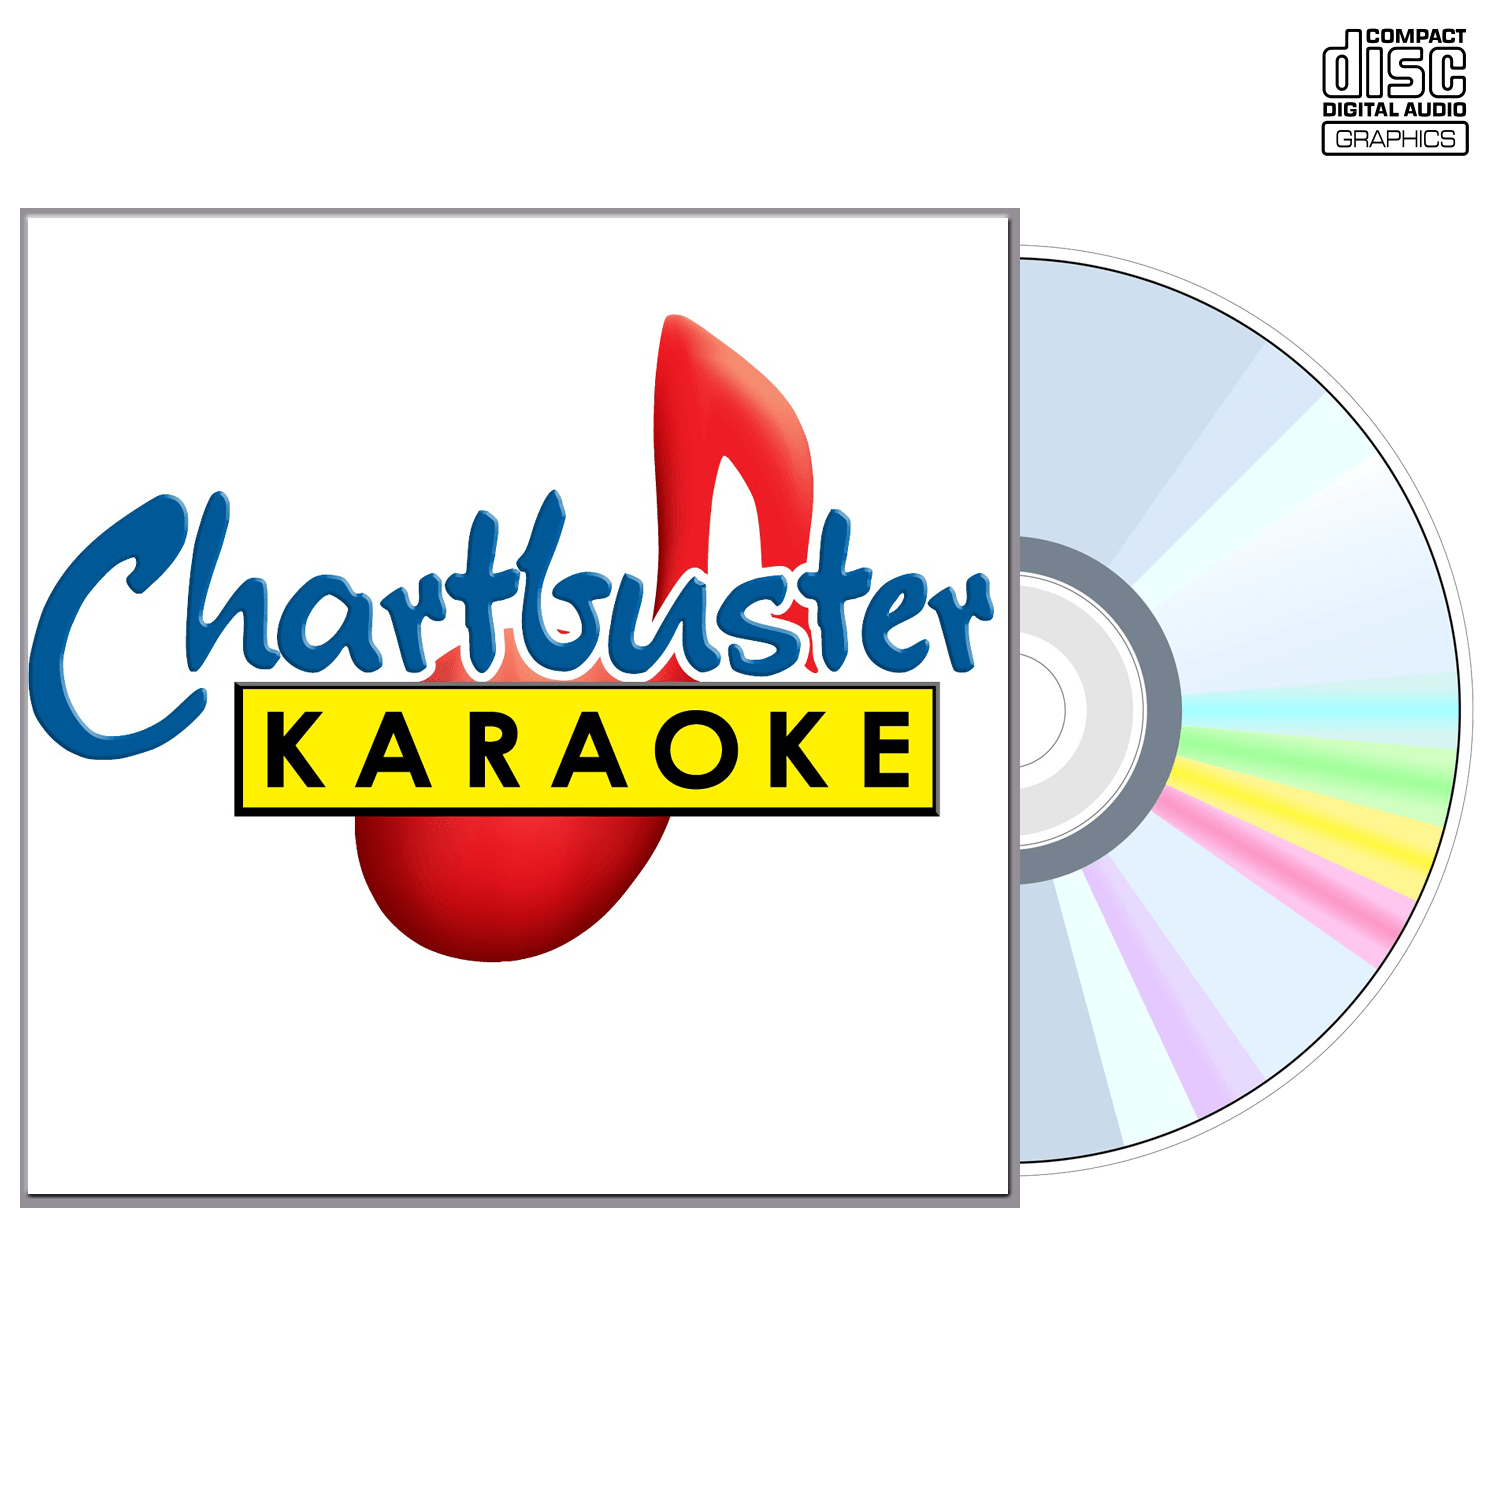 Boys Like Girls - CD+G - Chartbuster Karaoke - Karaoke Home Entertainment